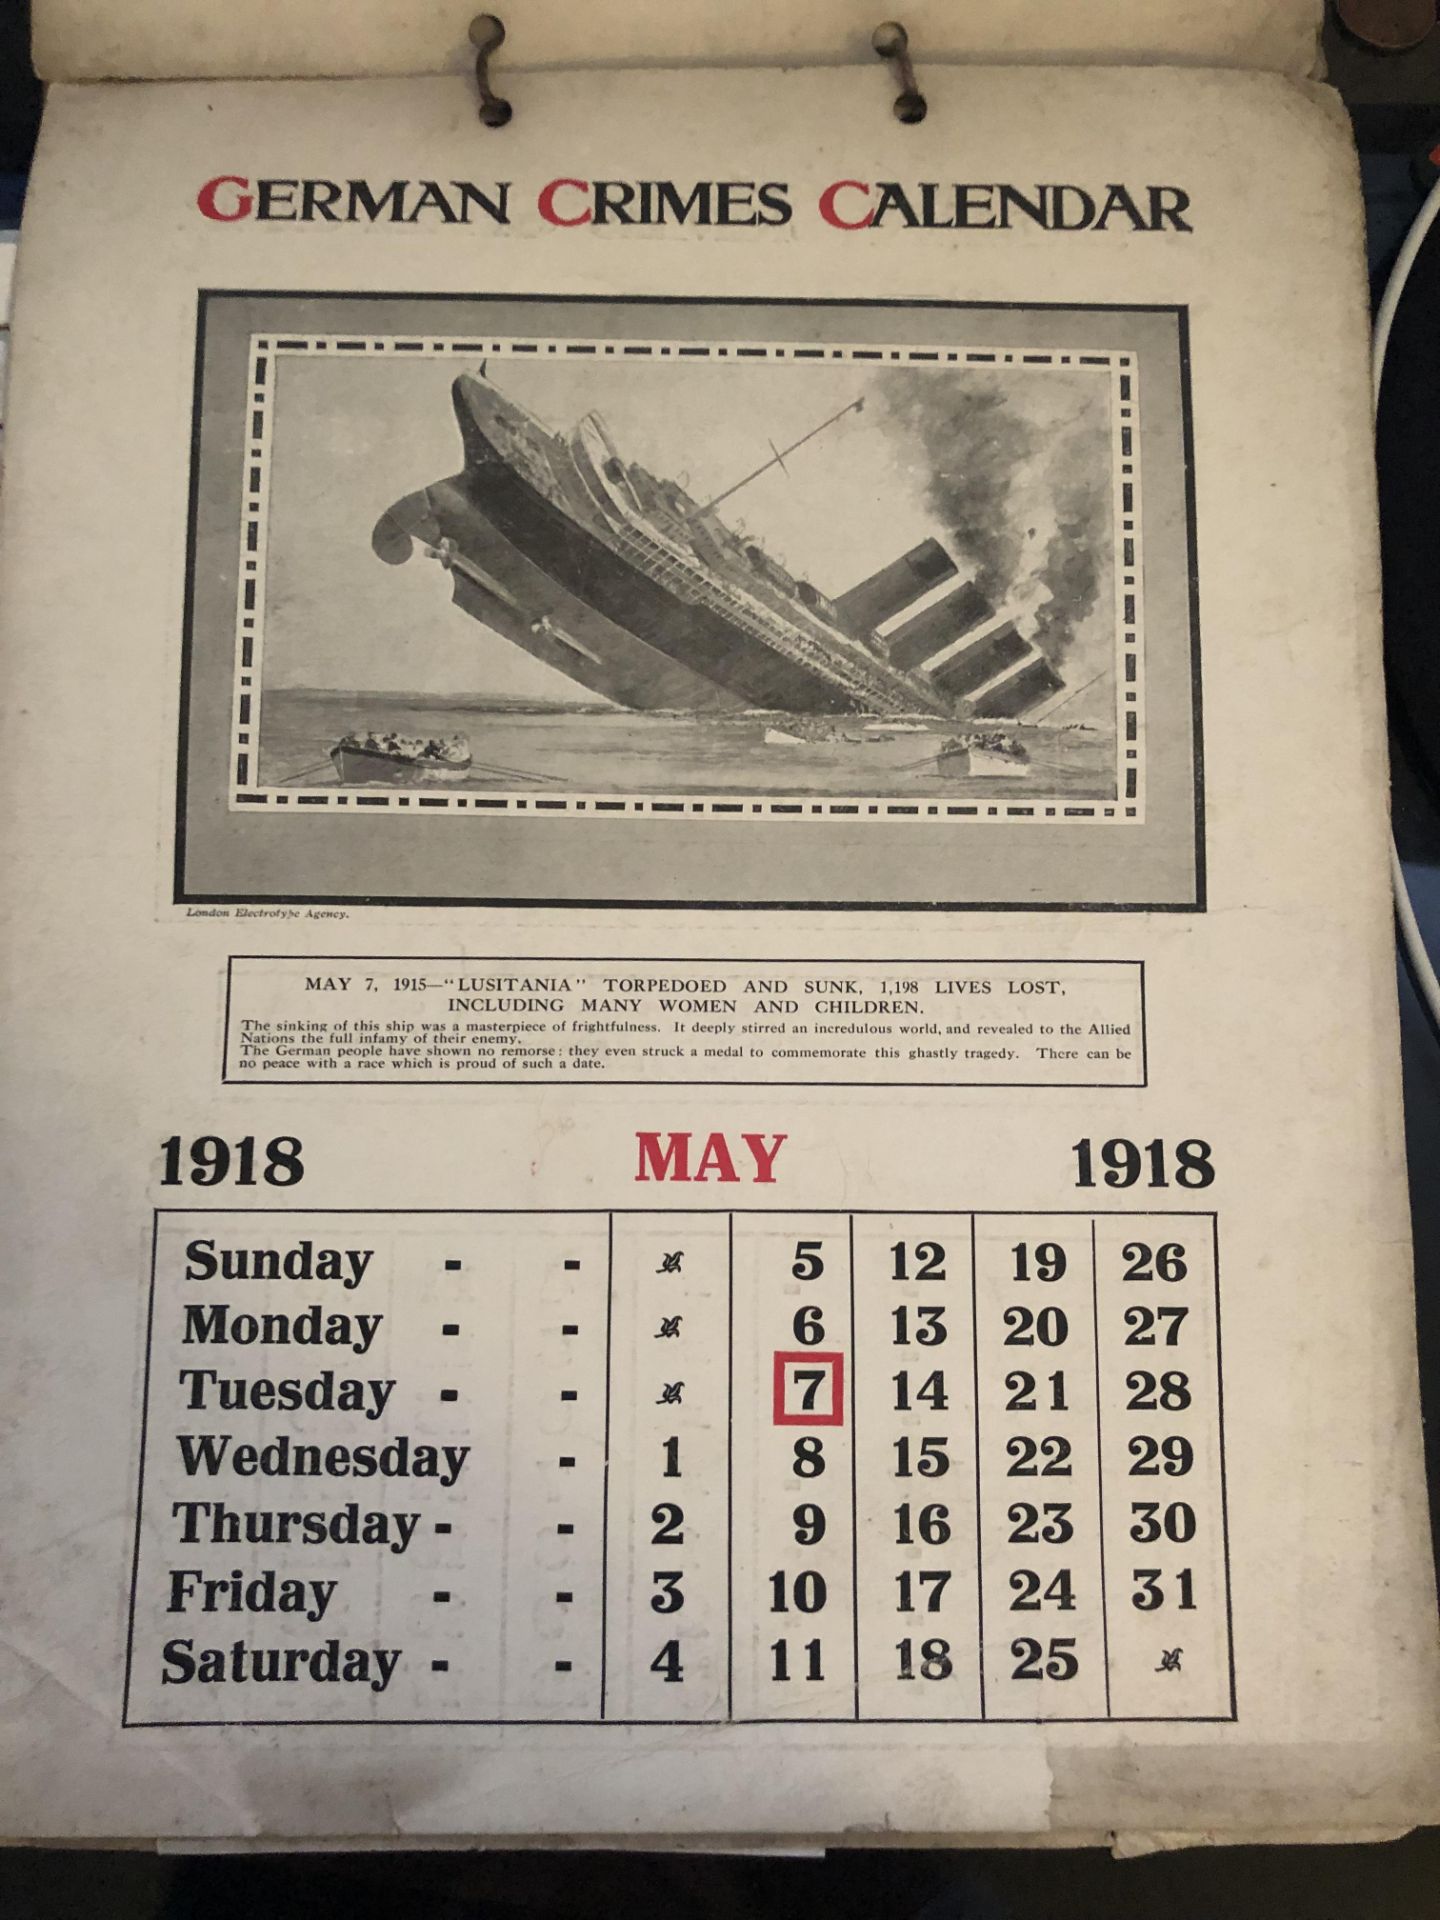 1918 German Crimes Calendar - Image 3 of 12